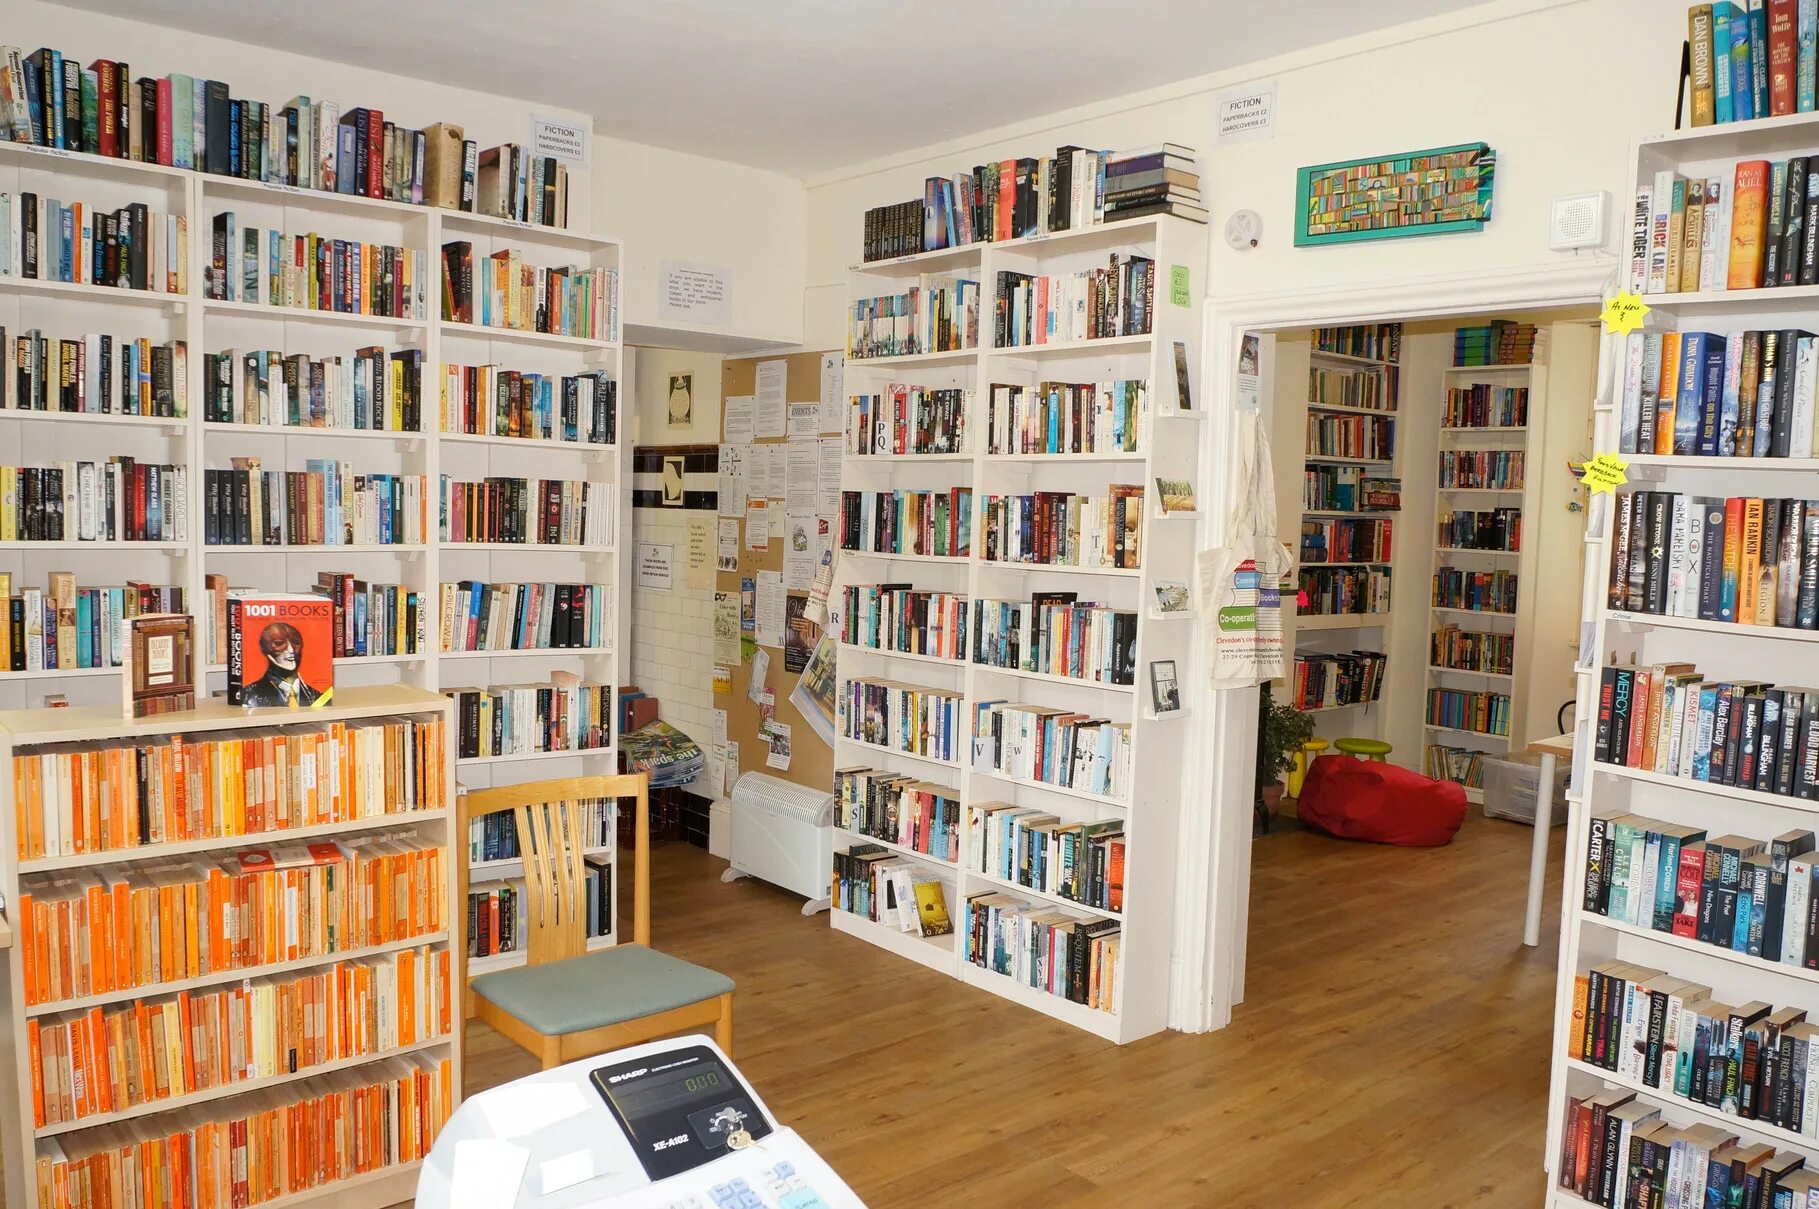 Bookshop. Bookshop Garayev. Bookshop photo. Book shop images. The books in this shop are